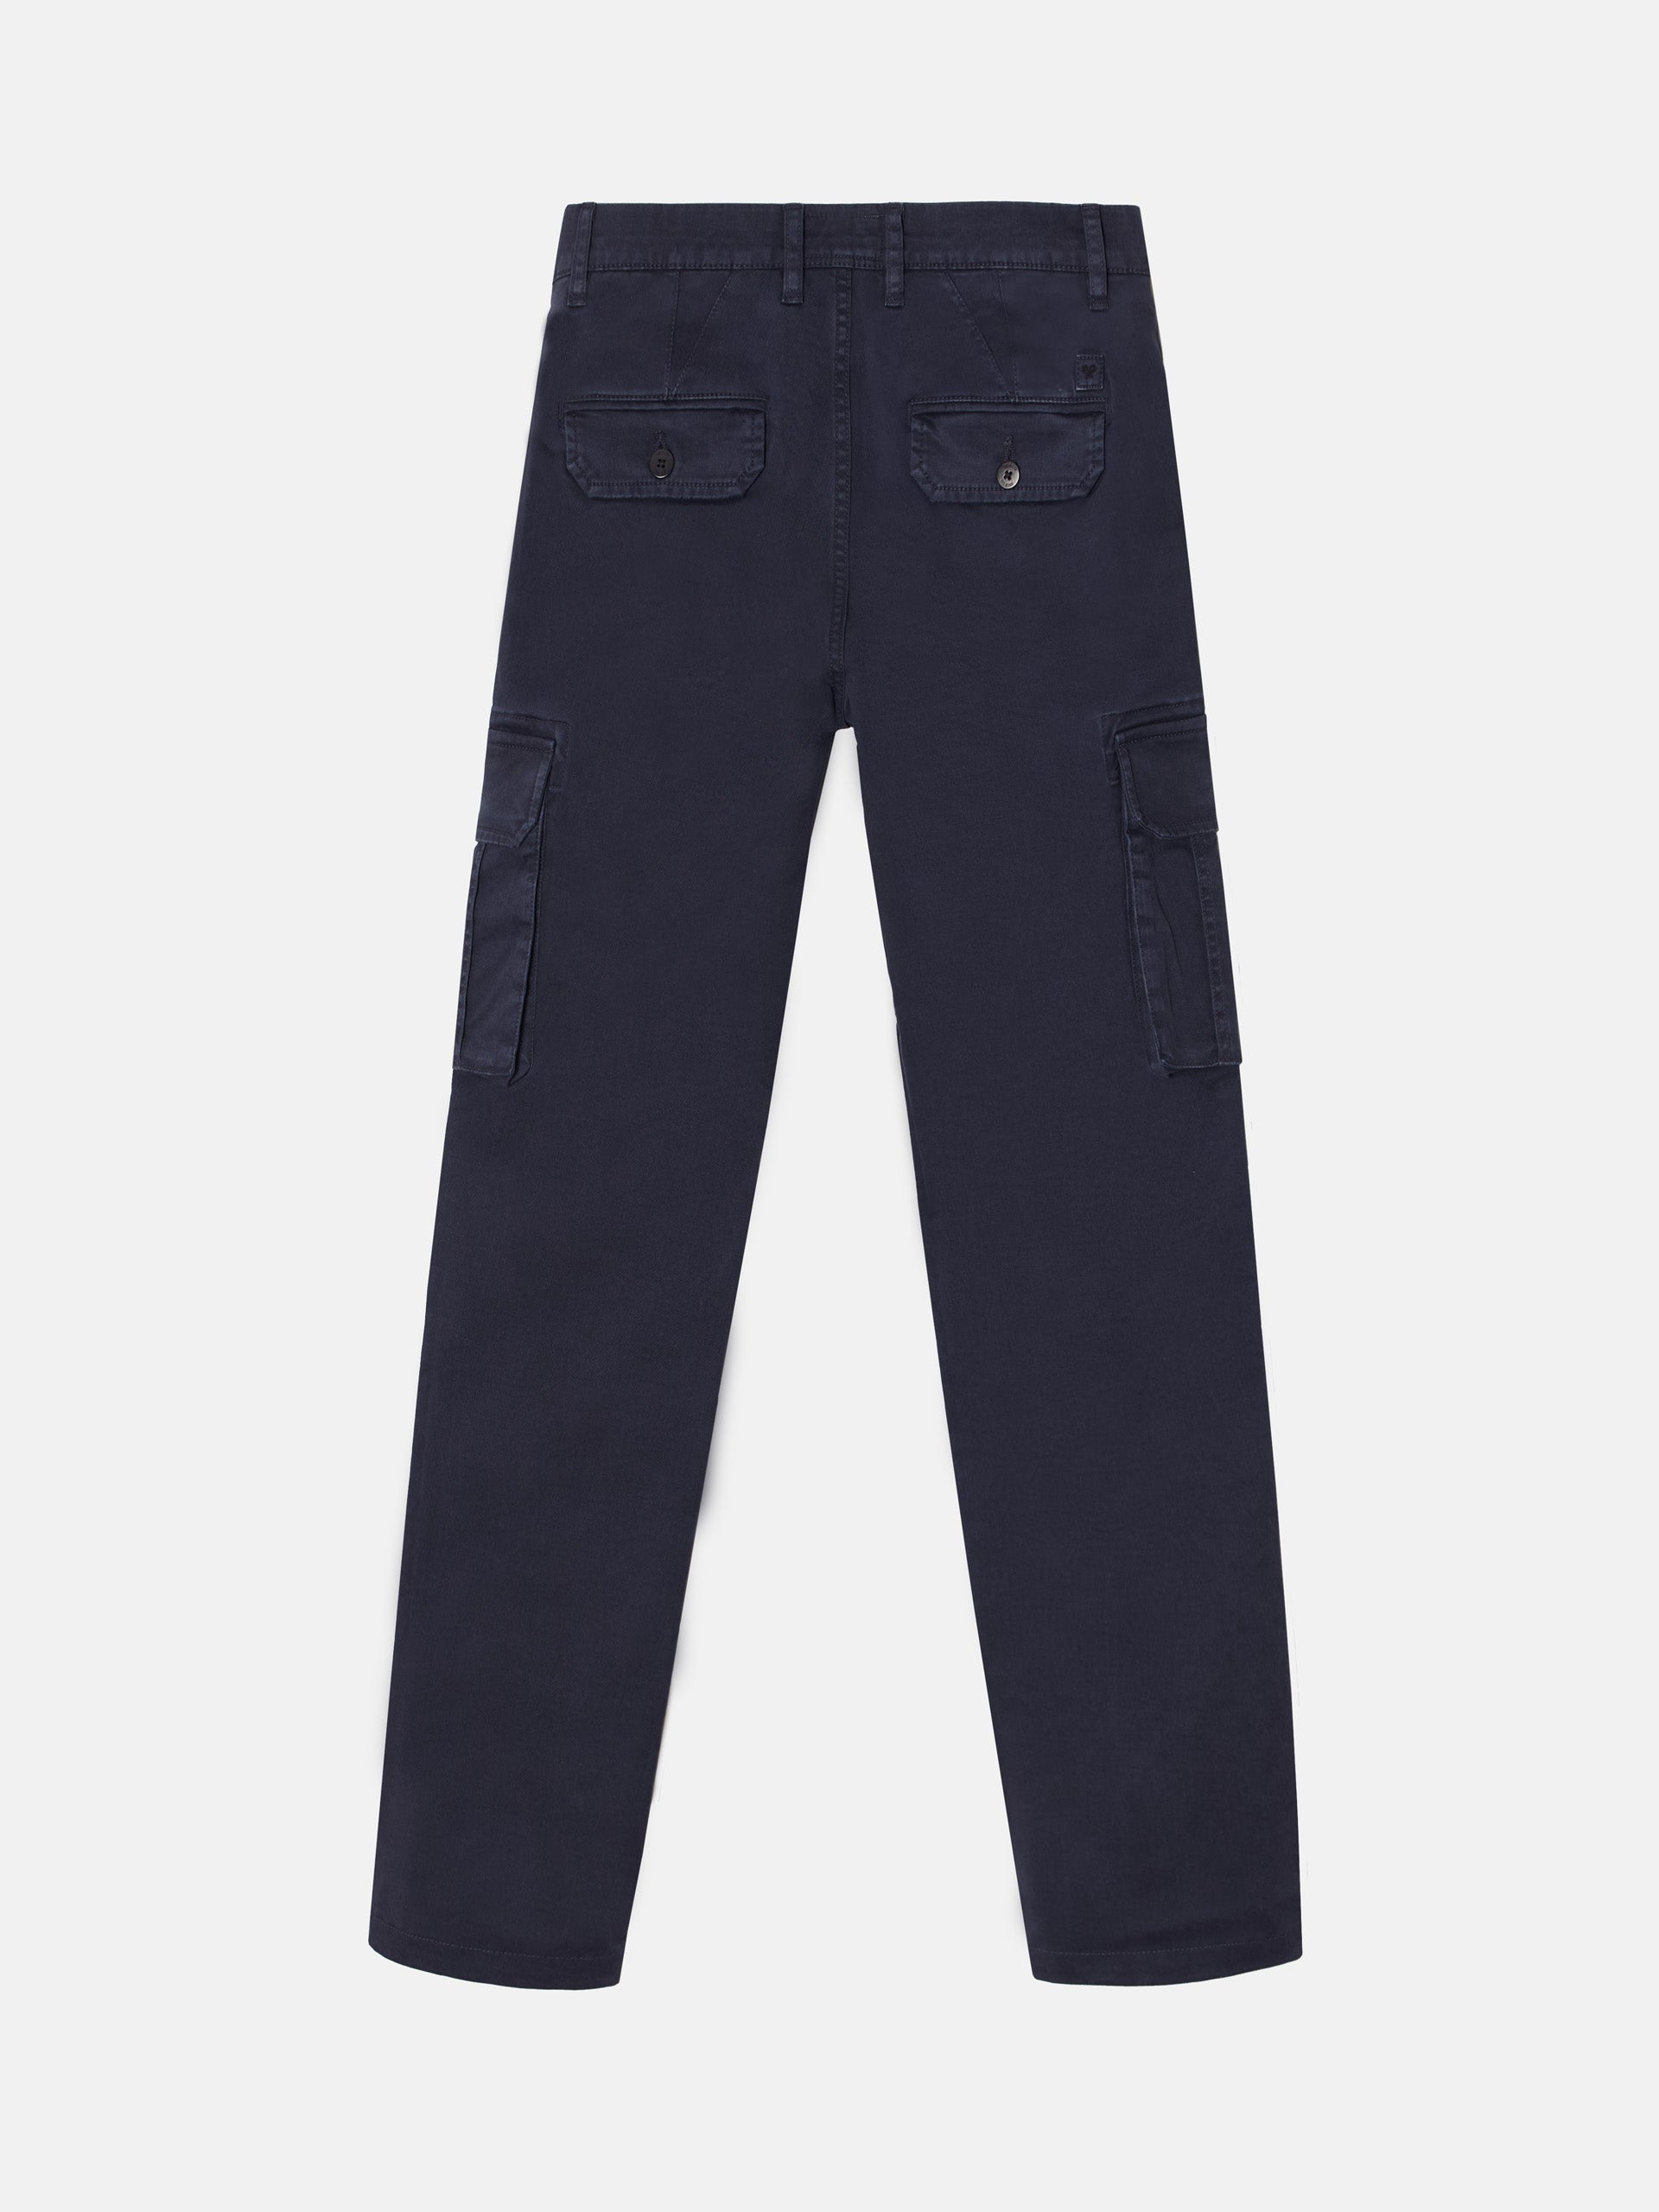 Navy blue cargo sport pants